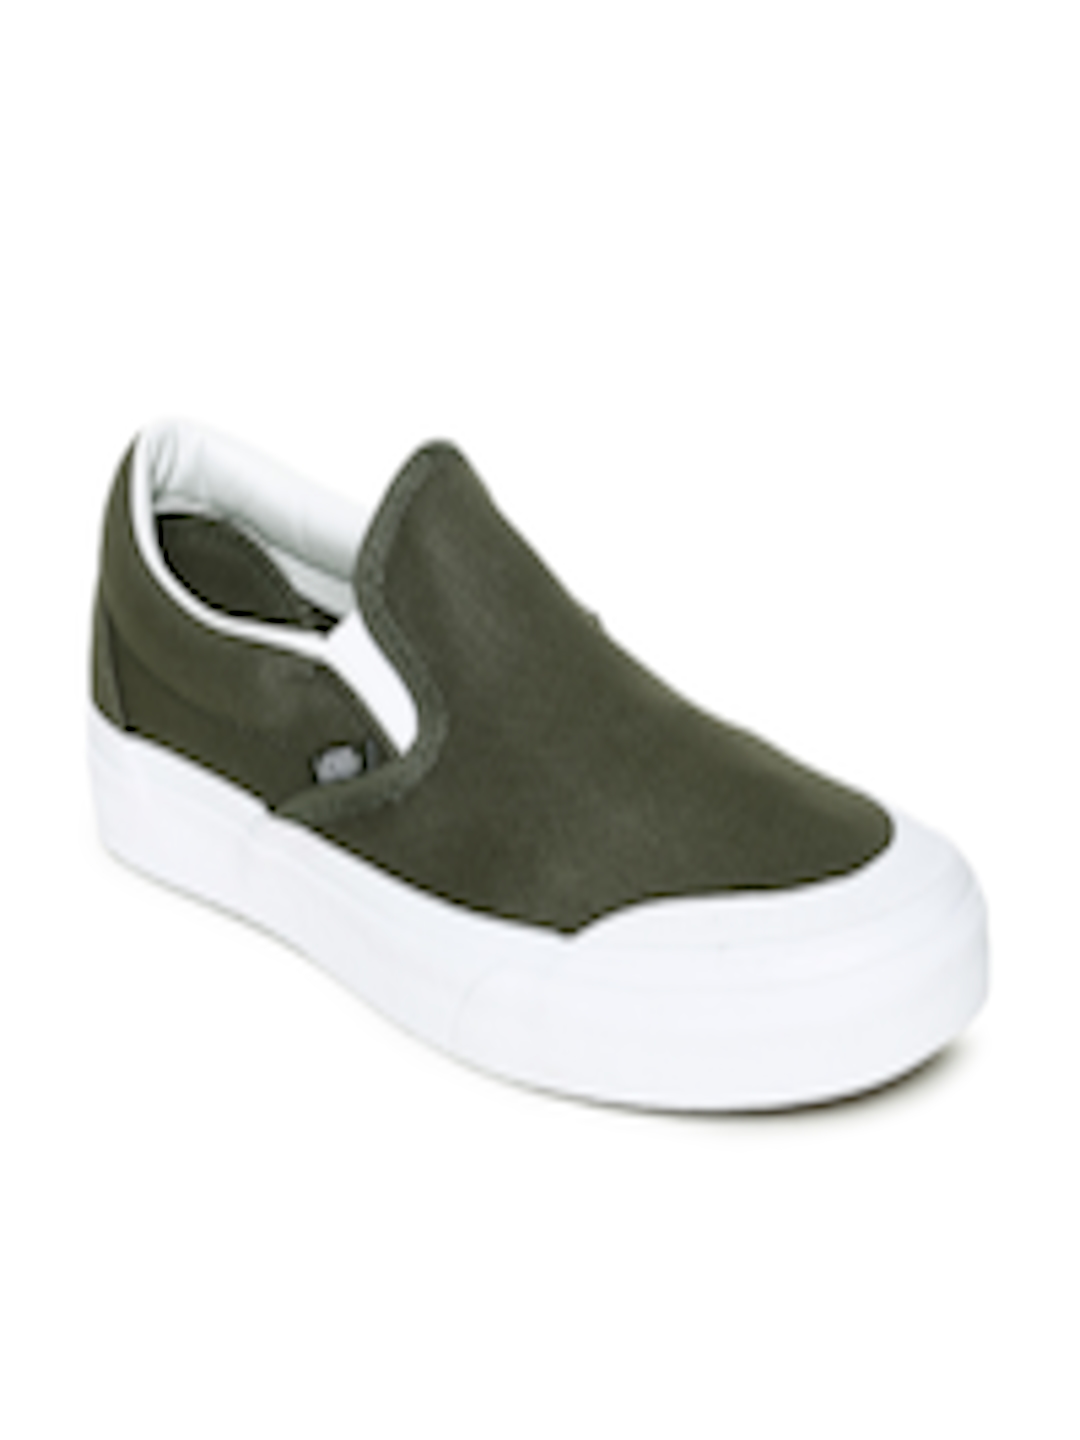 Buy Vans Unisex Green Slip On Sneakers - Casual Shoes for Unisex ...